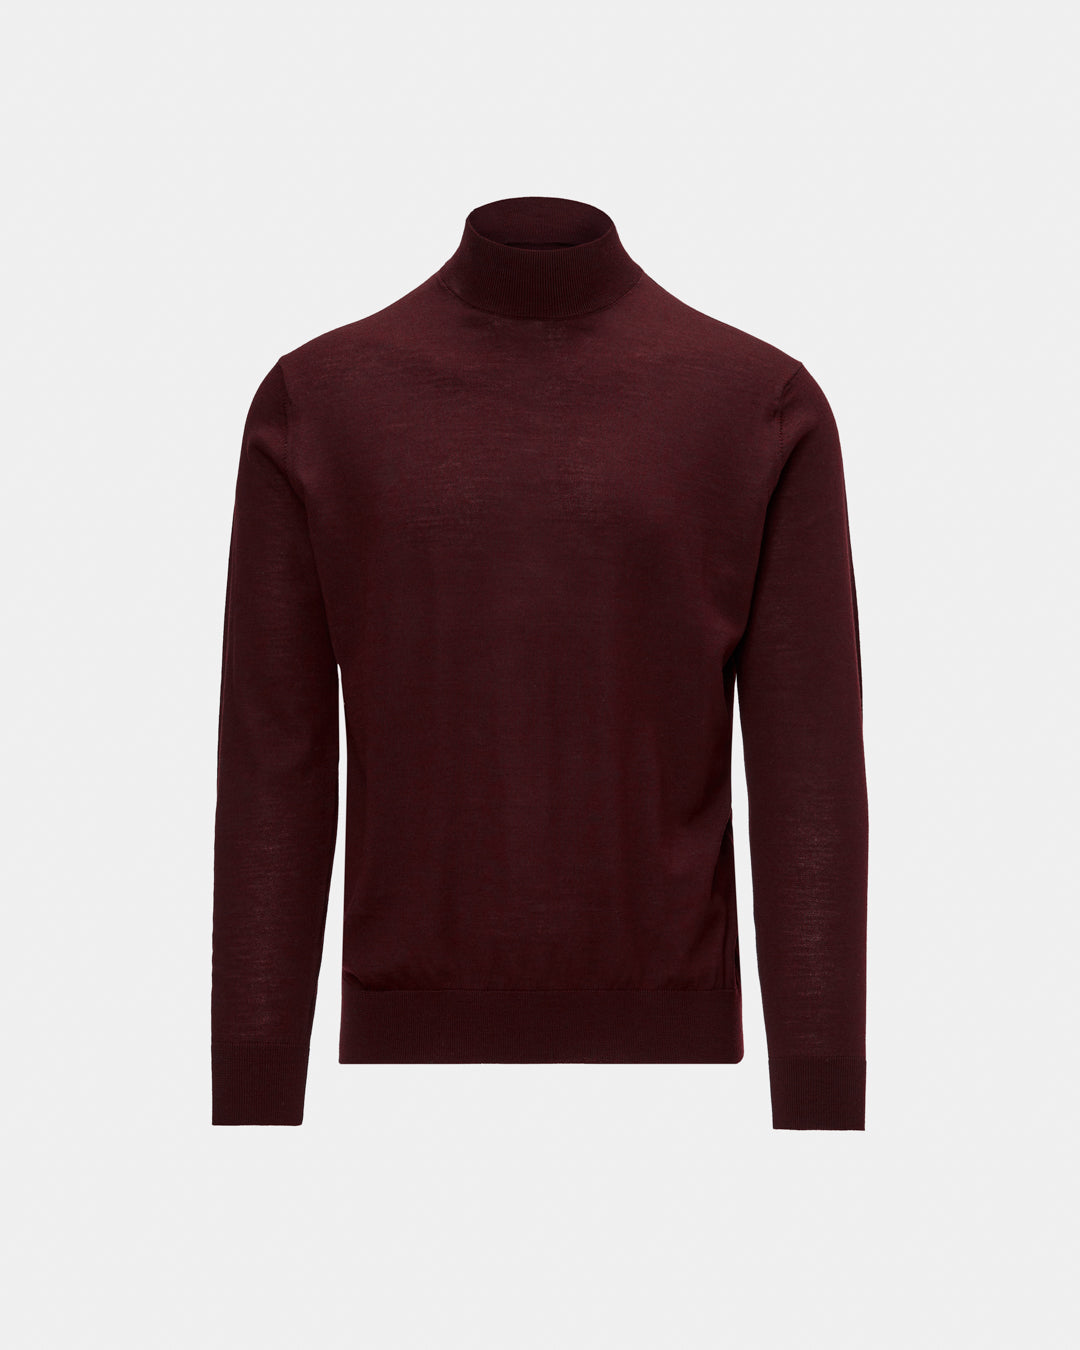 Bordeaux 16 GG merino wool high neck sweater